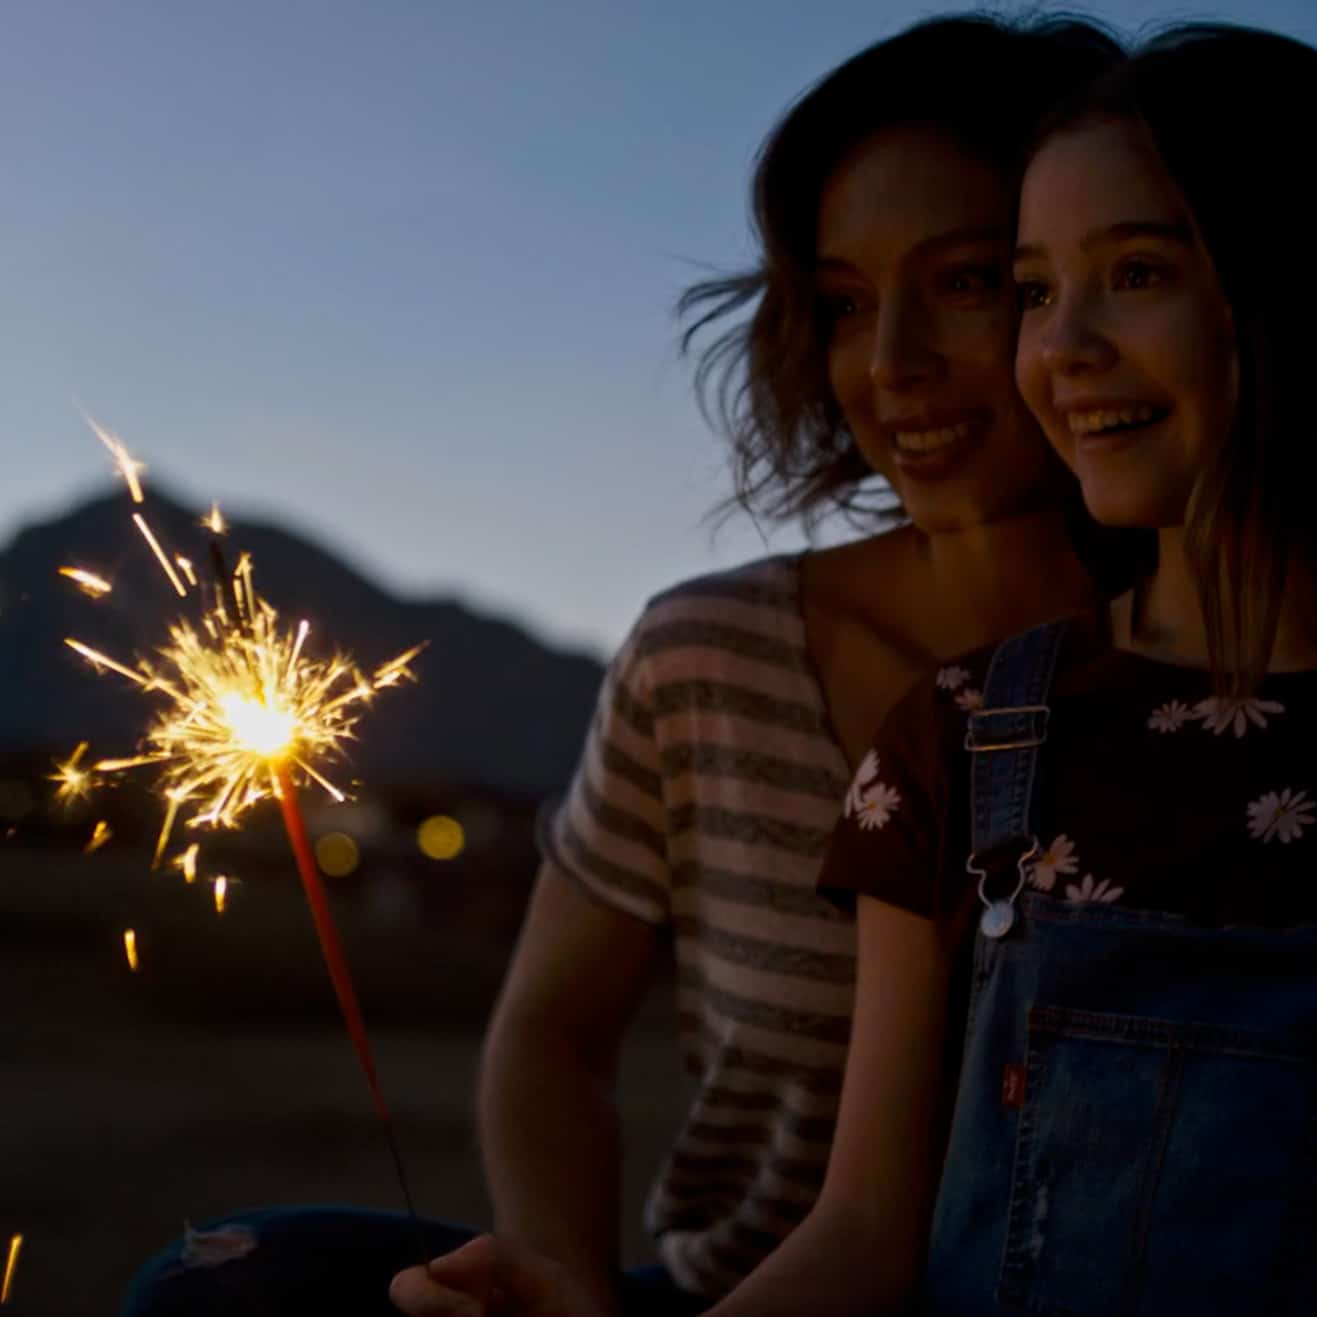 Adult and child enjoying a sparkler